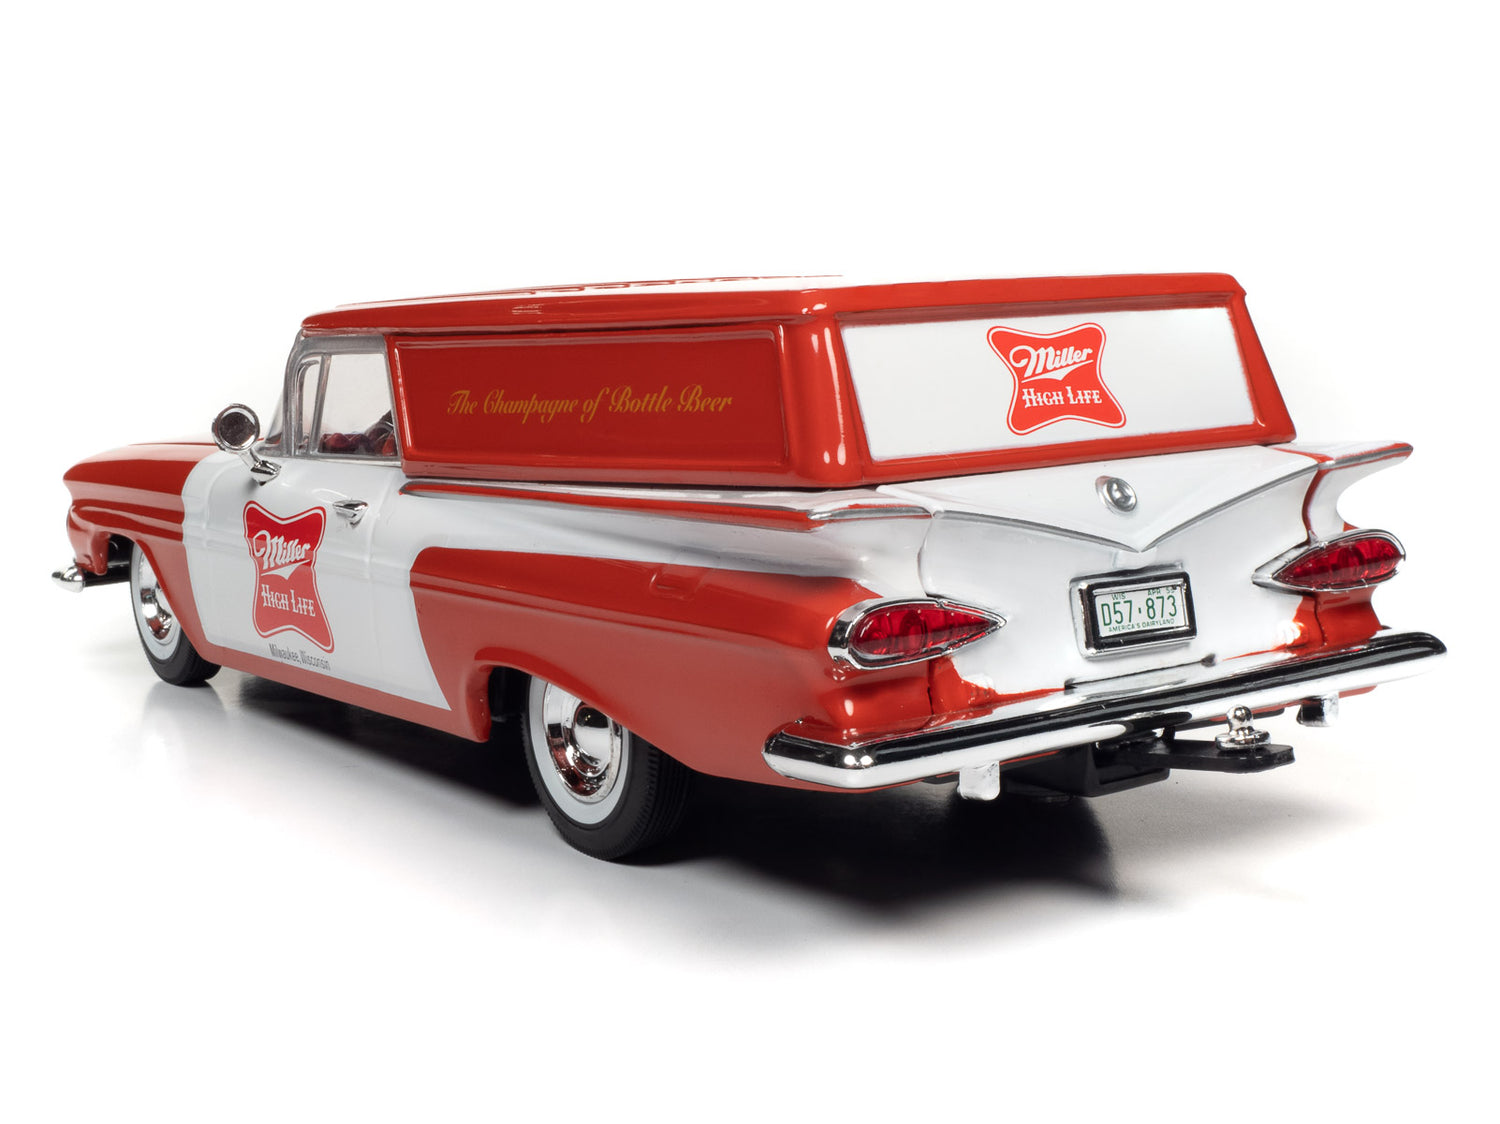 Auto World 1959 Chevrolet El Camino Sedan Delivery Truck Miller High Life 1:24 Scale Diecast